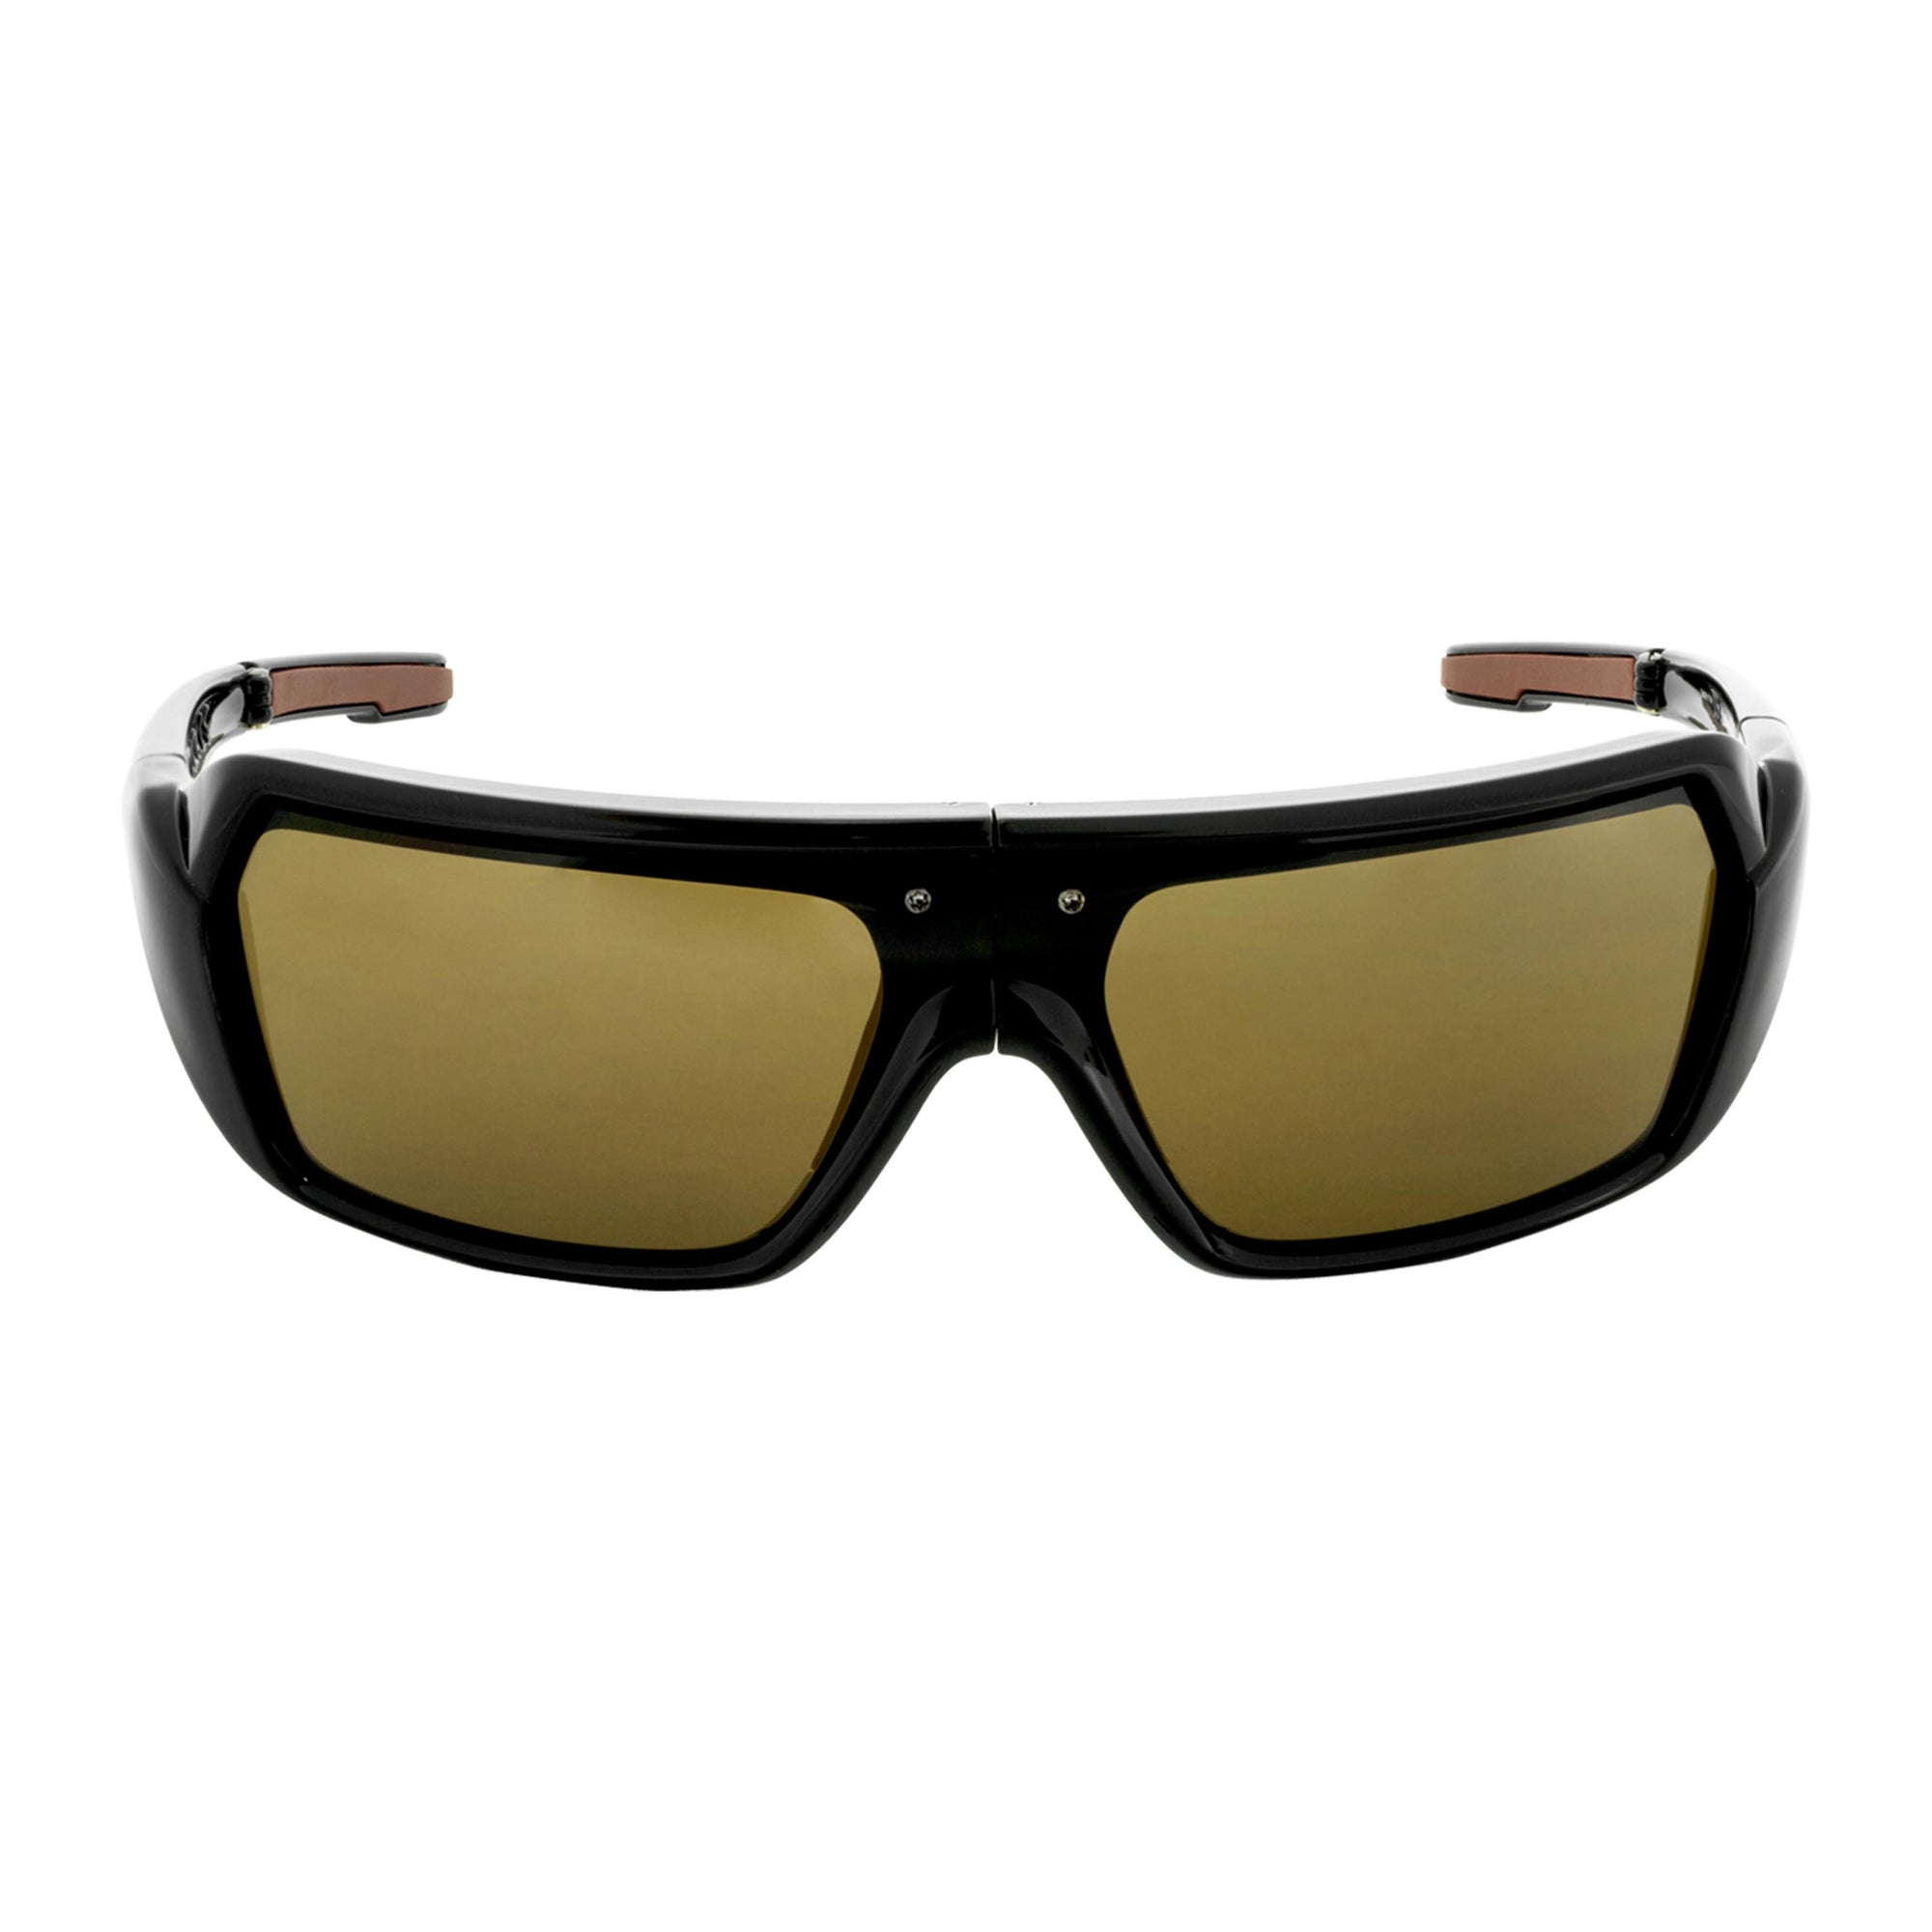 Popticals, Premium Compact Sunglasses, PopStorm, 010060-BGNP, Polarized Sunglasses, Gloss Black Frame, Brown Lenses, Glam View